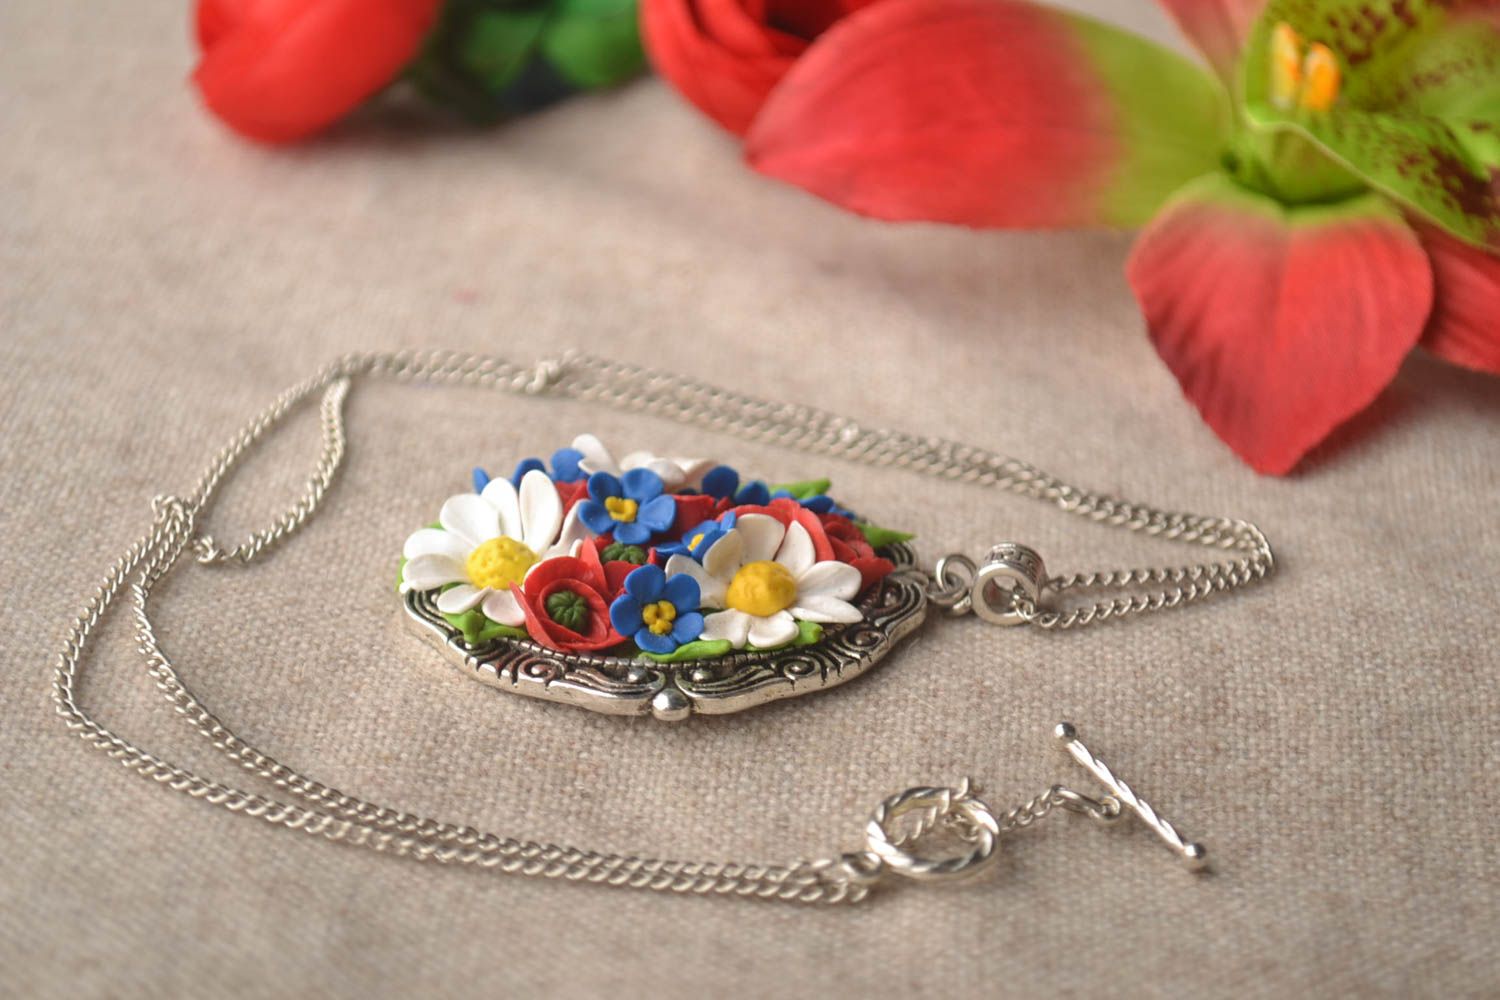 Handmade accessory unique cold porcelain necklace present ideas for girls photo 1